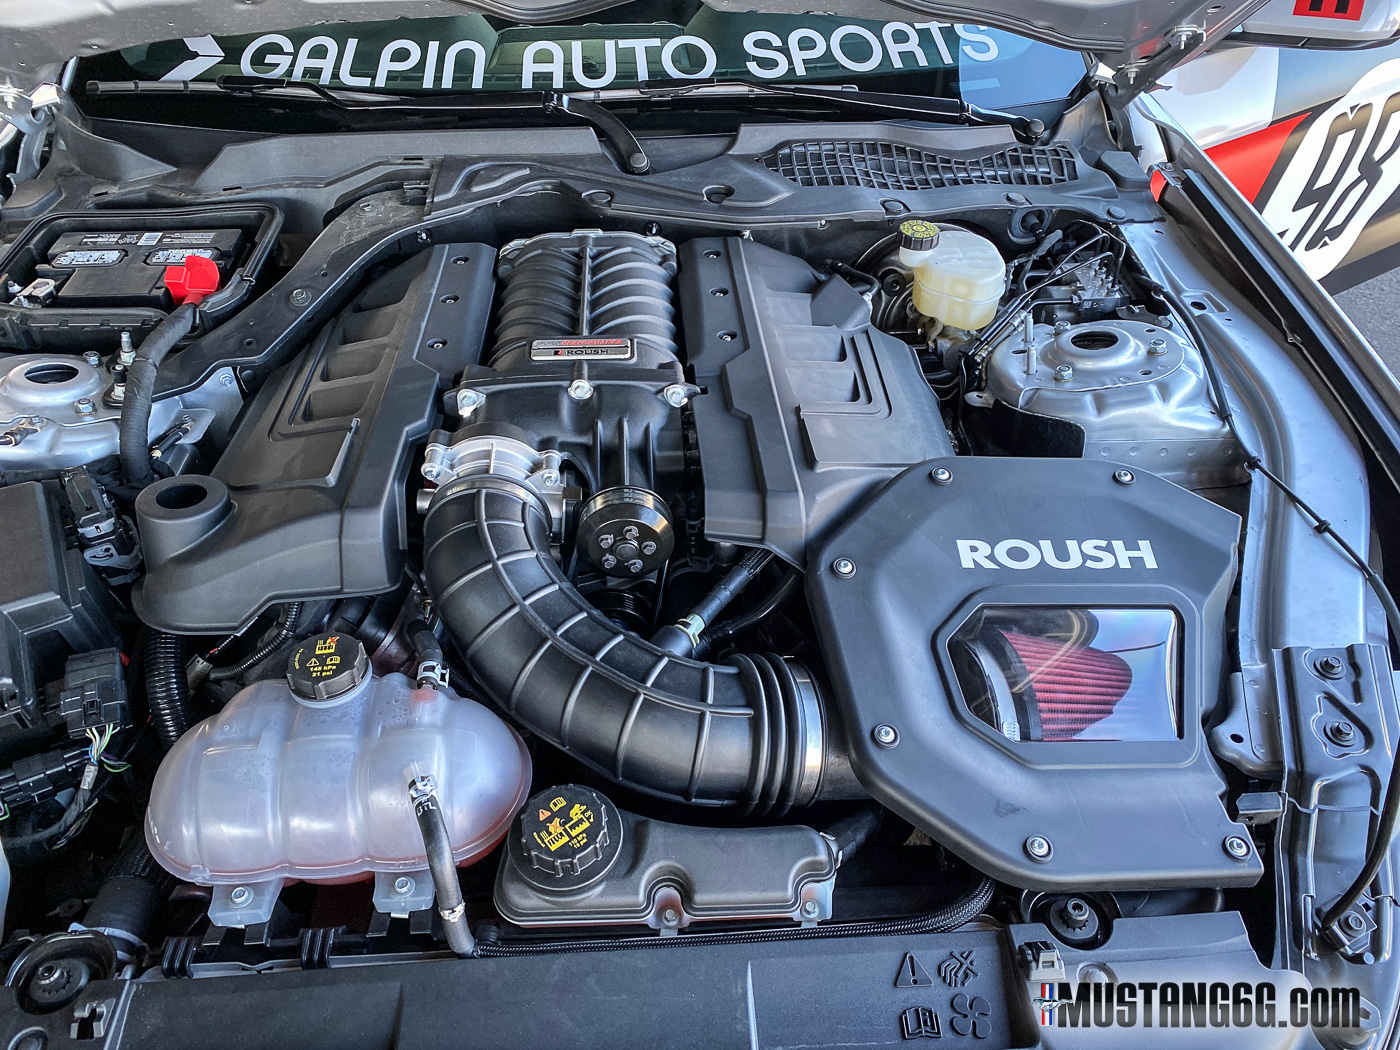 Galpin-Auto-Sports-Roush-Mustang-SEMA-2019-2.jpg